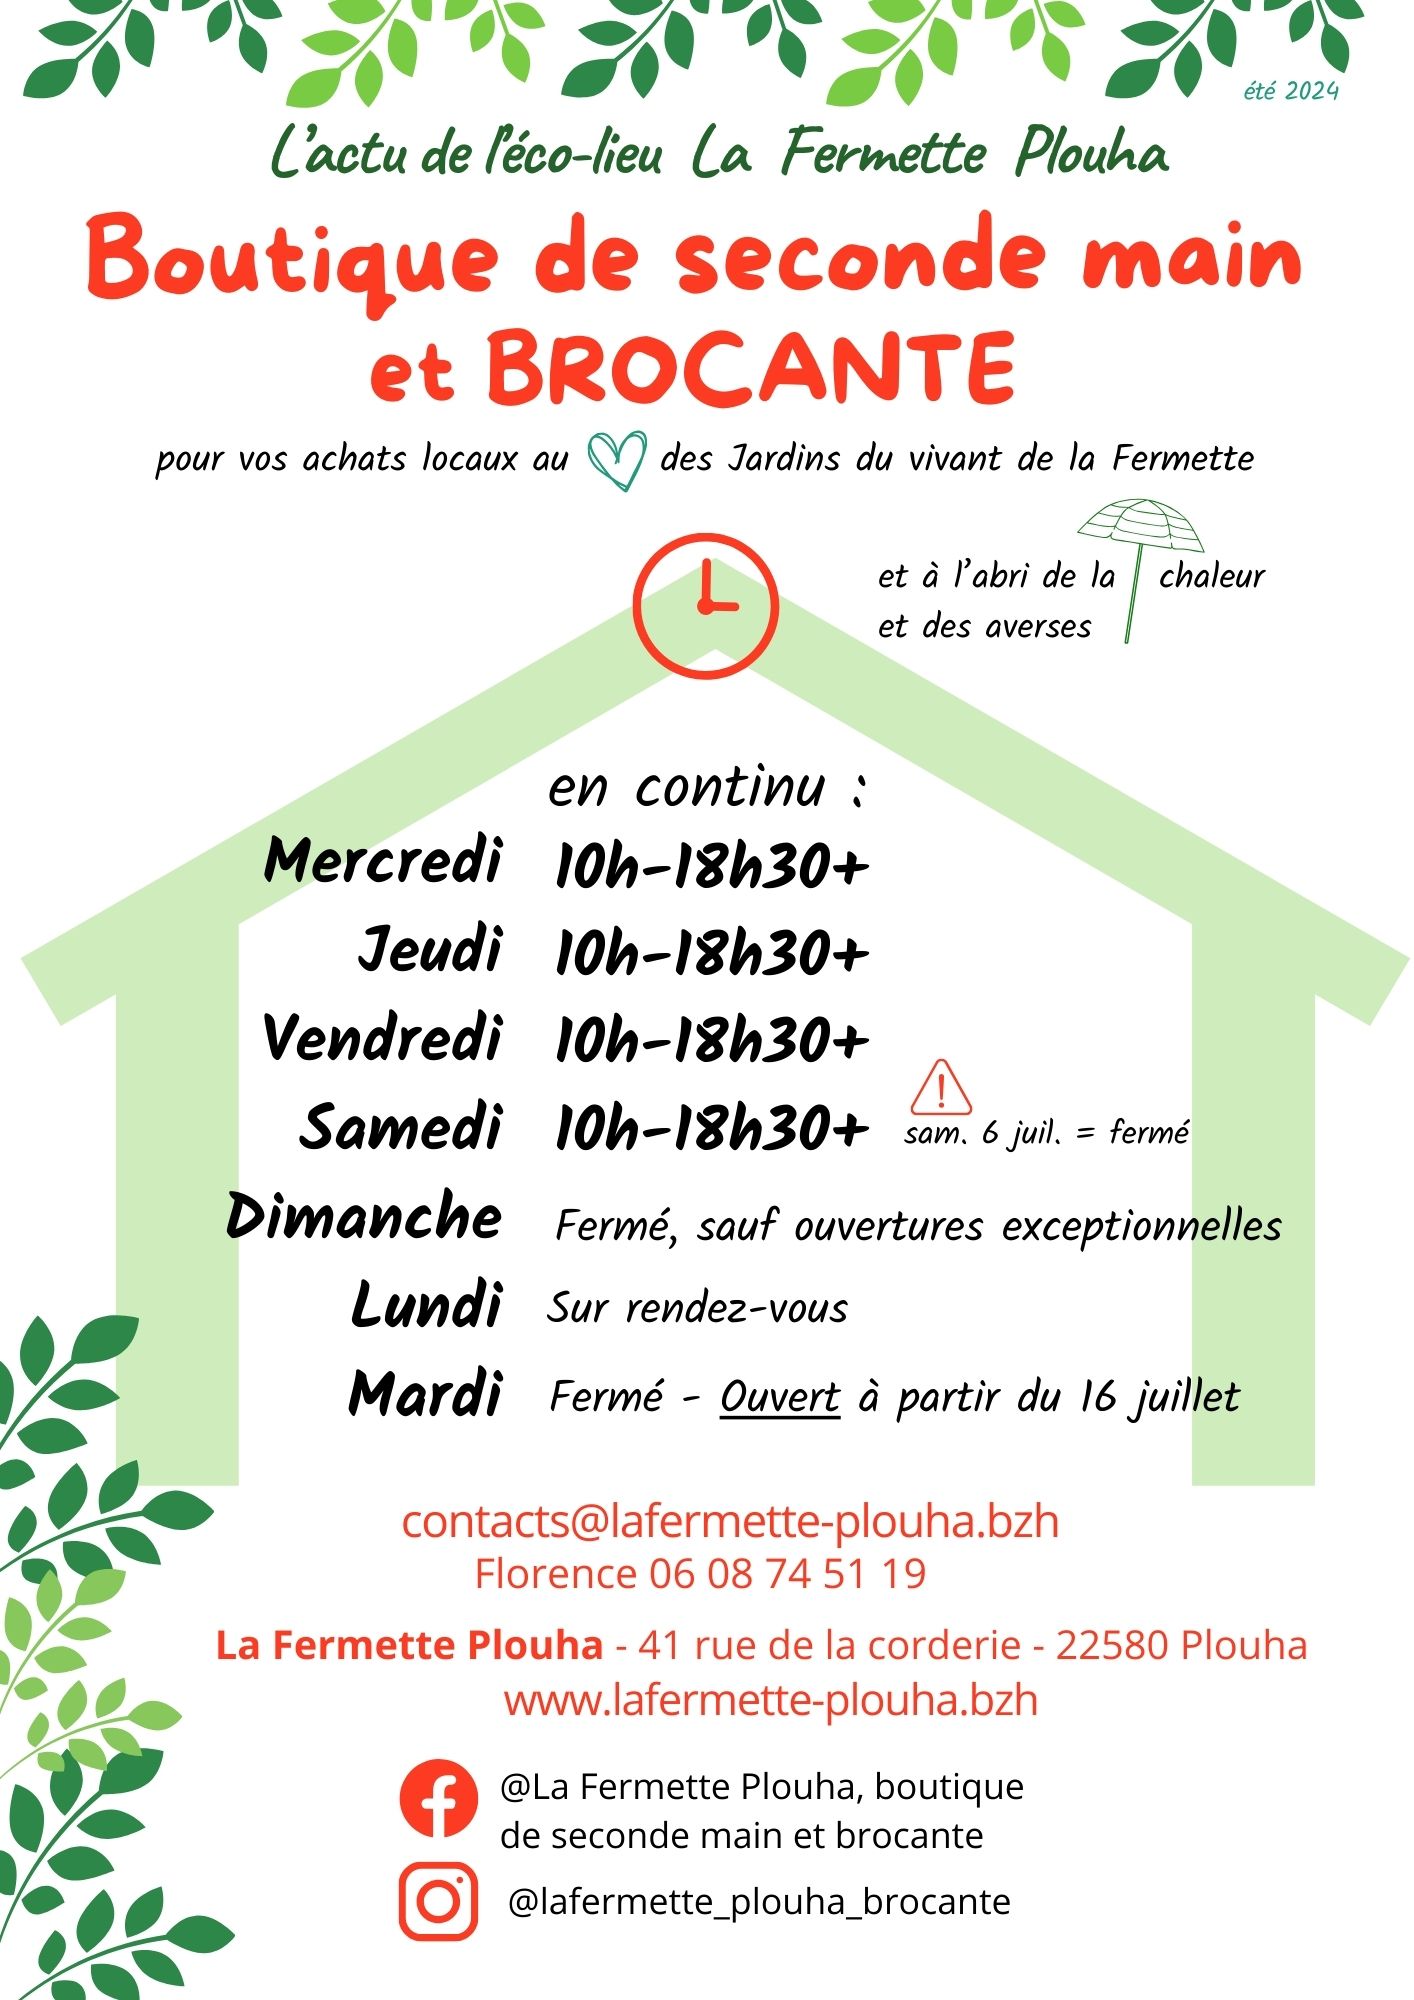 Horaires-Brocante-Ecolieu-LaFermettePlouha